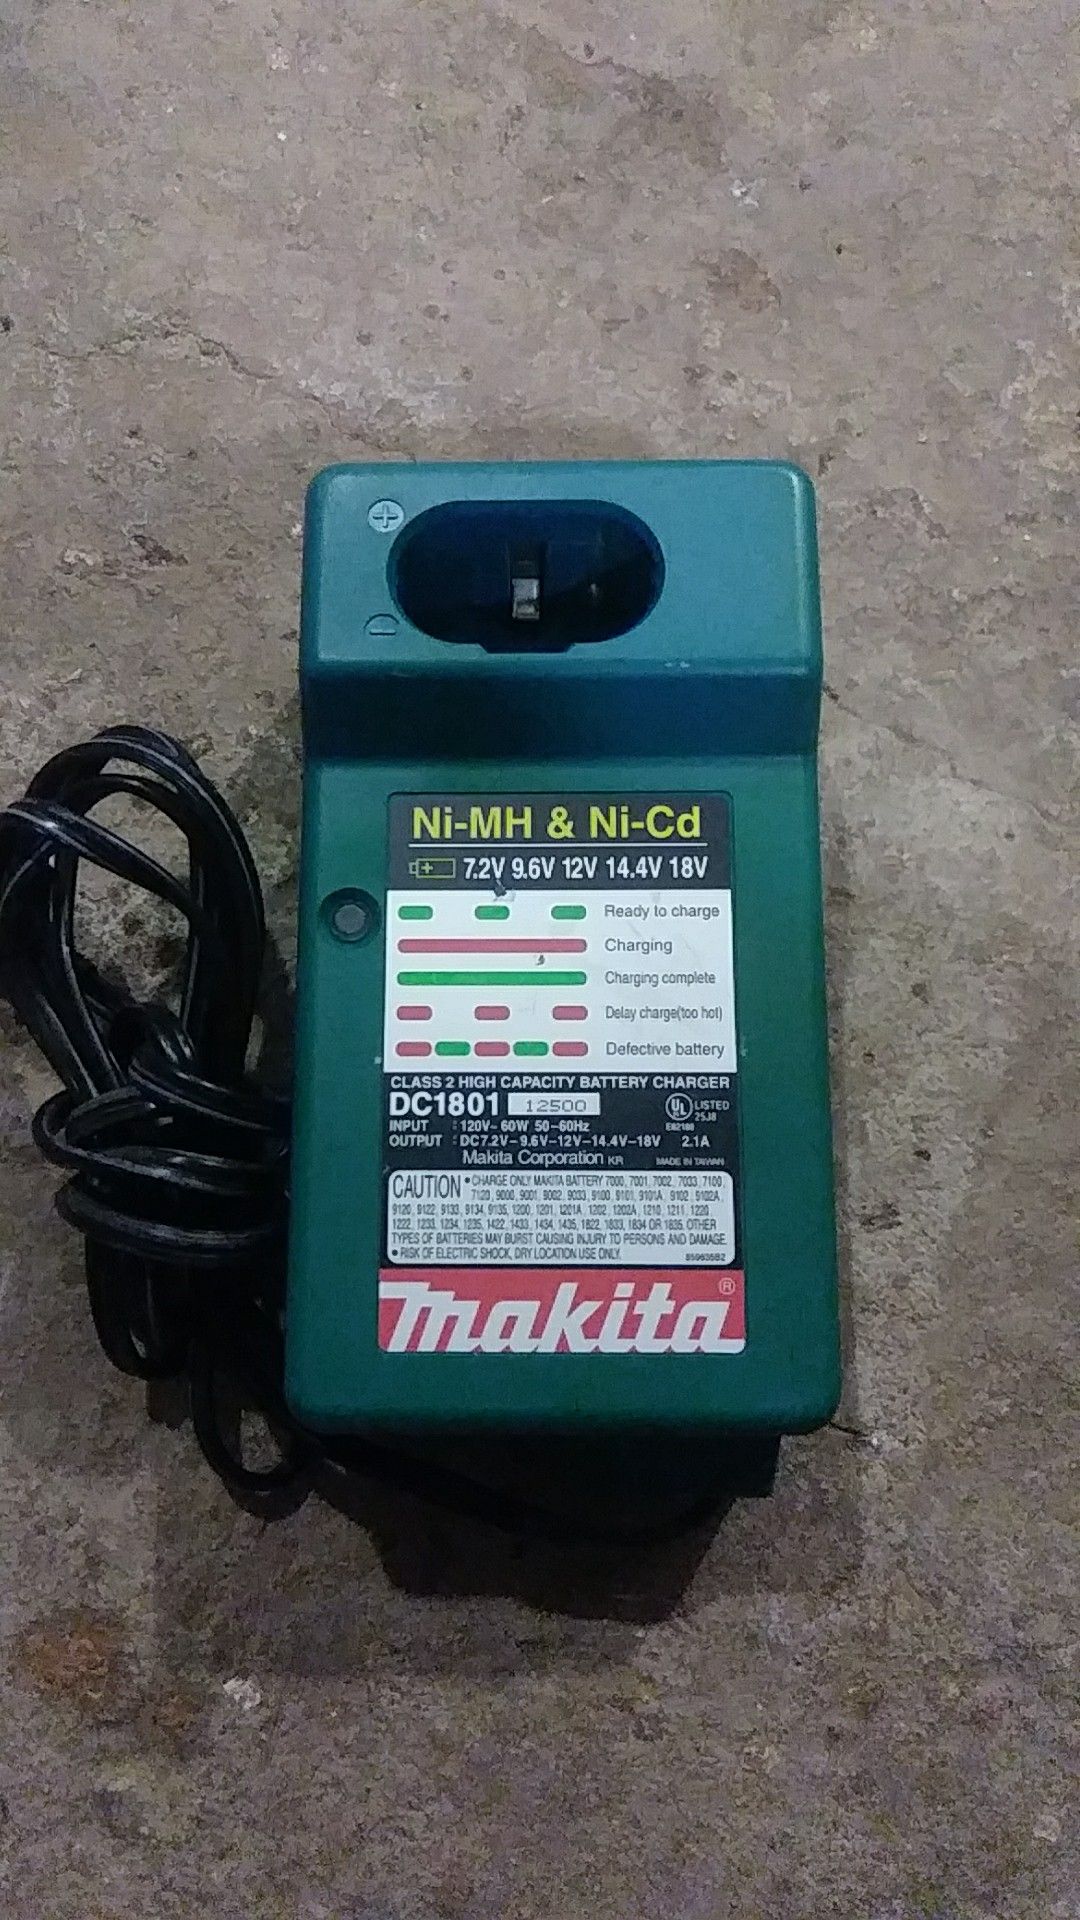 Makita charger